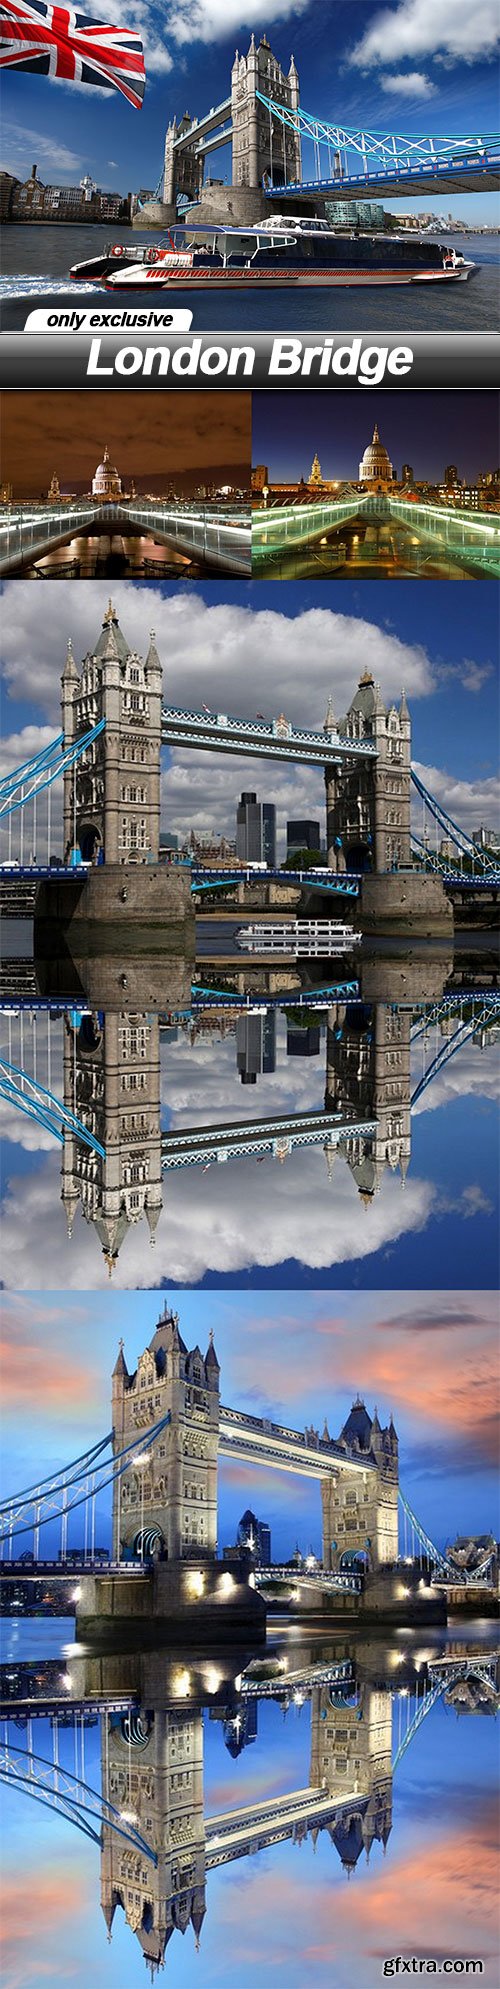 London Bridge - 5 UHQ JPEG